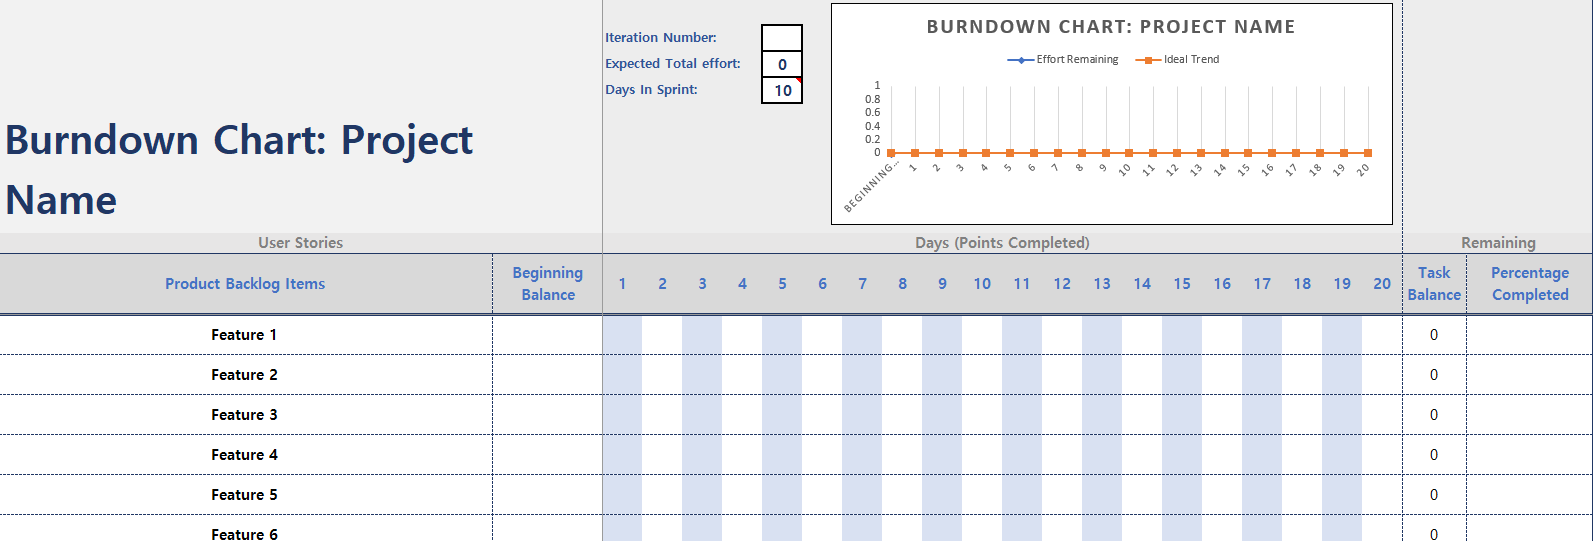 Microsoft Excel Burndown Chart Template